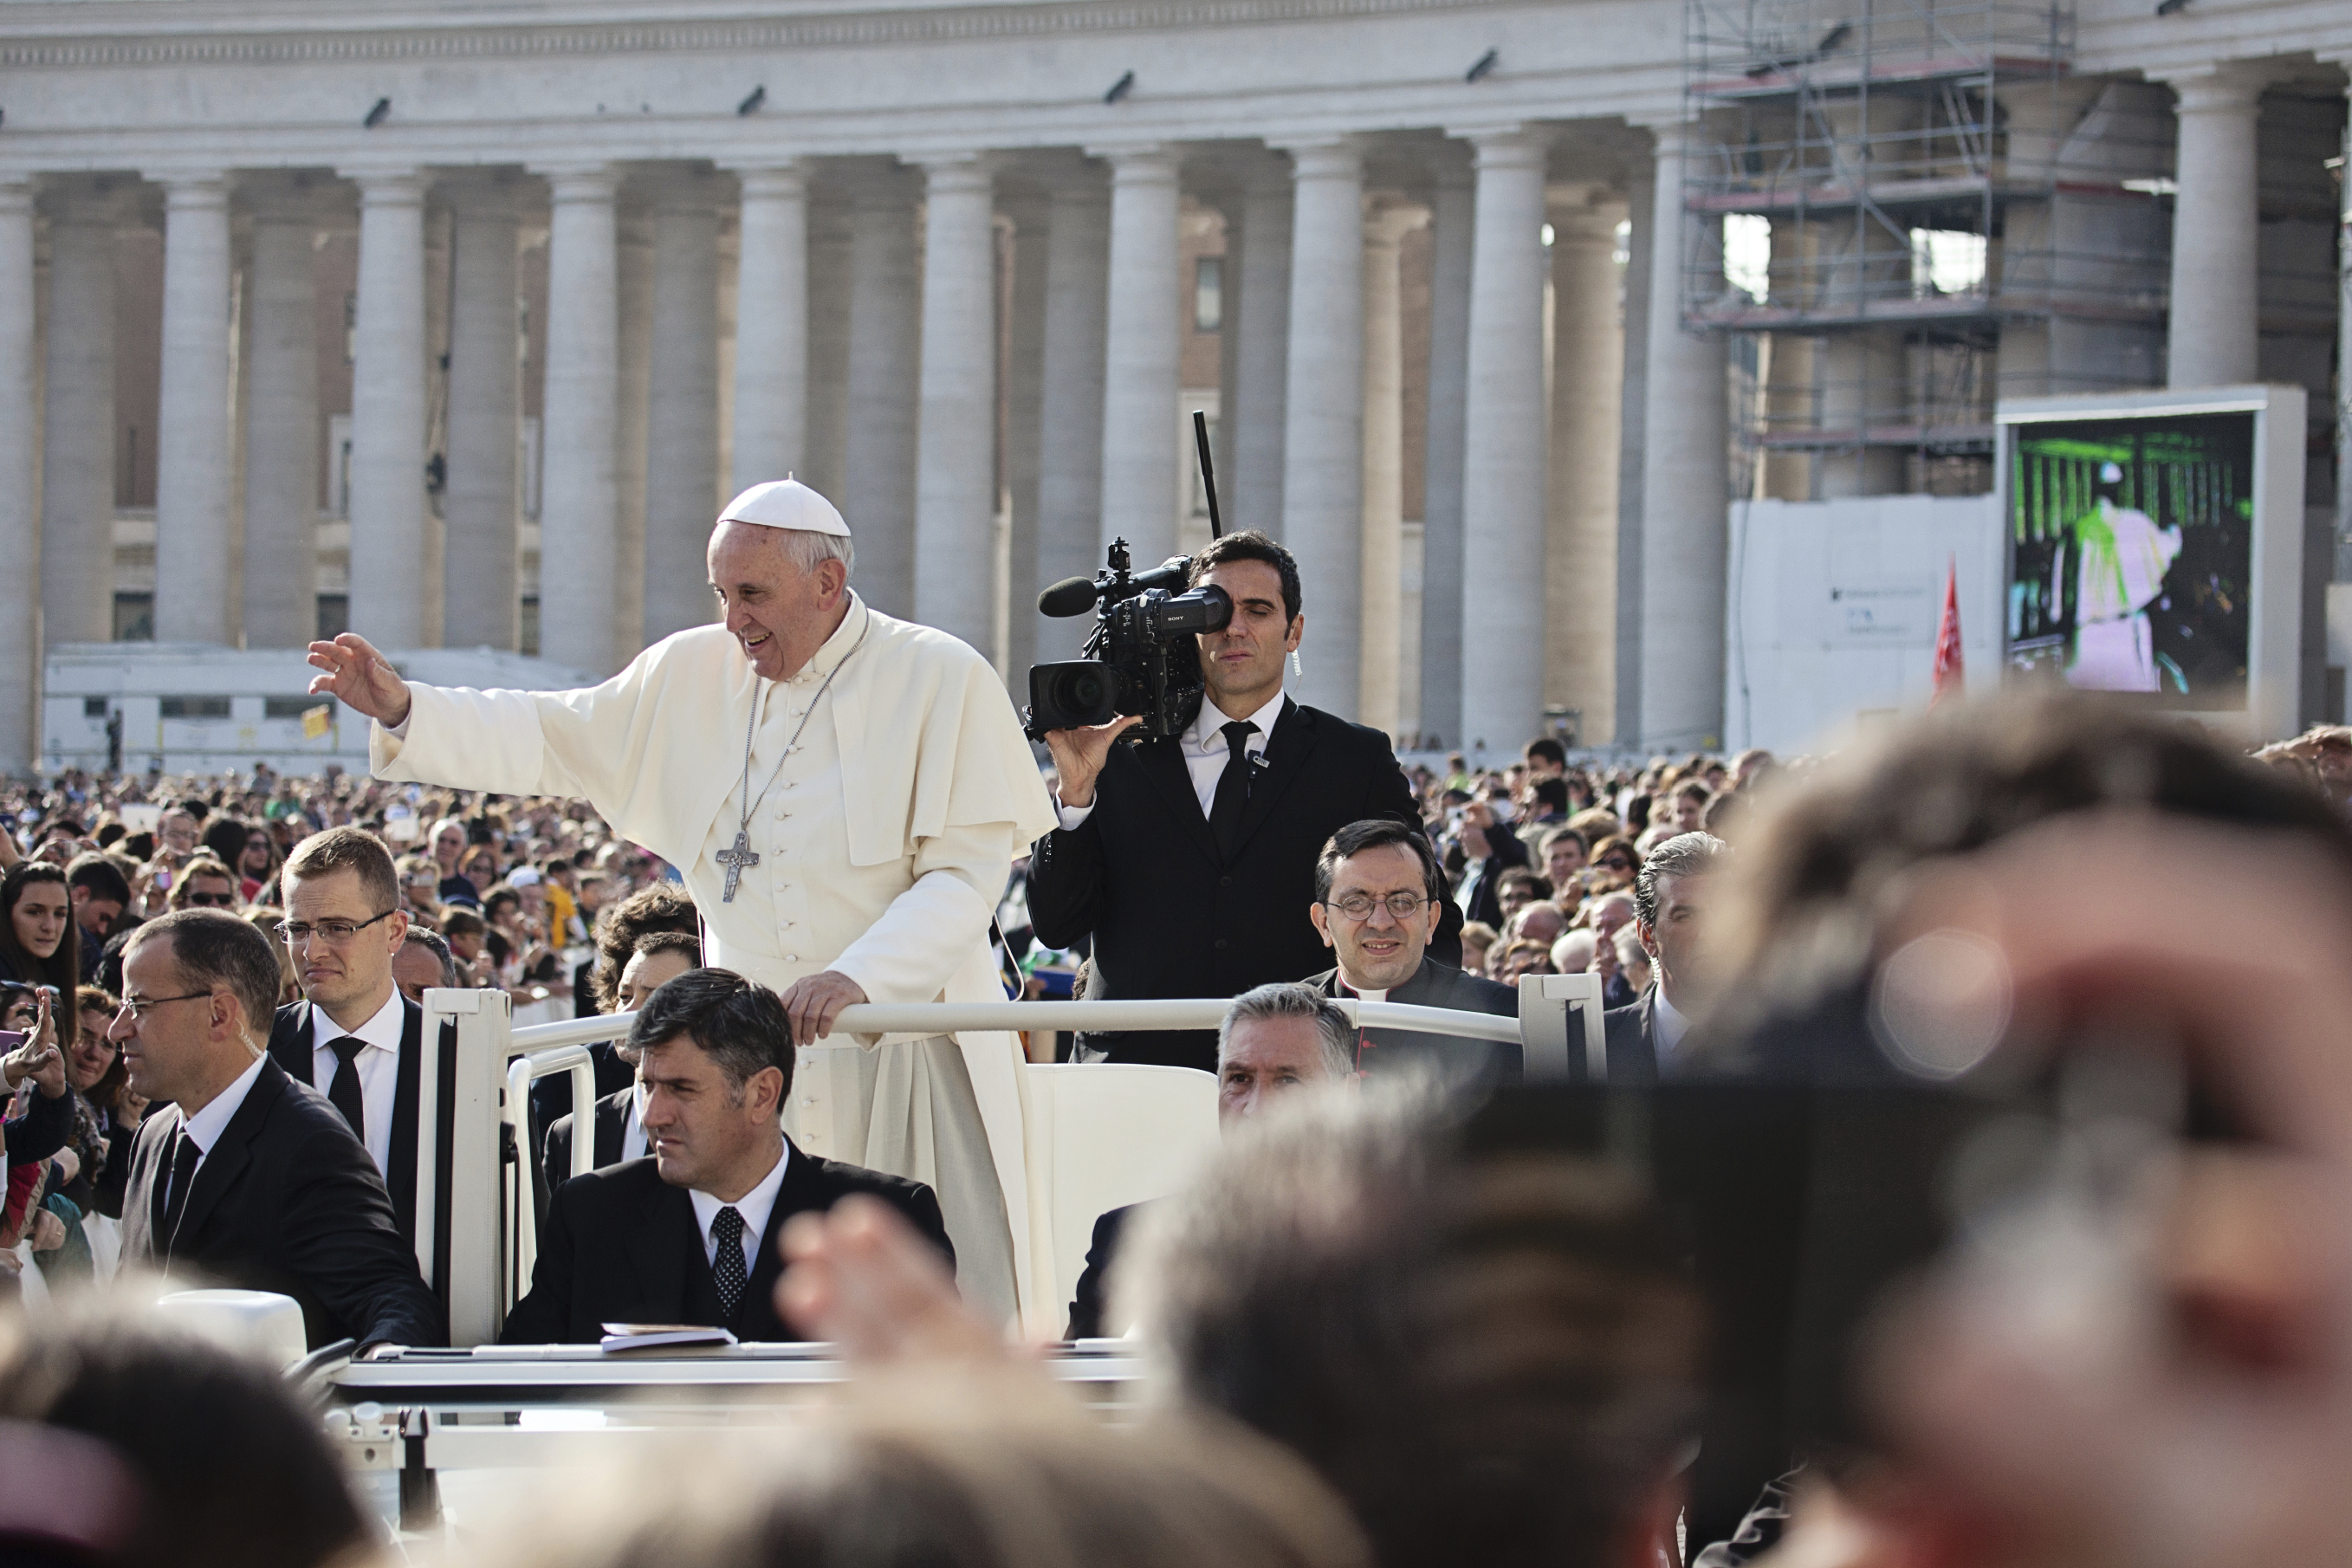 Pope Francis I blesses the faithful